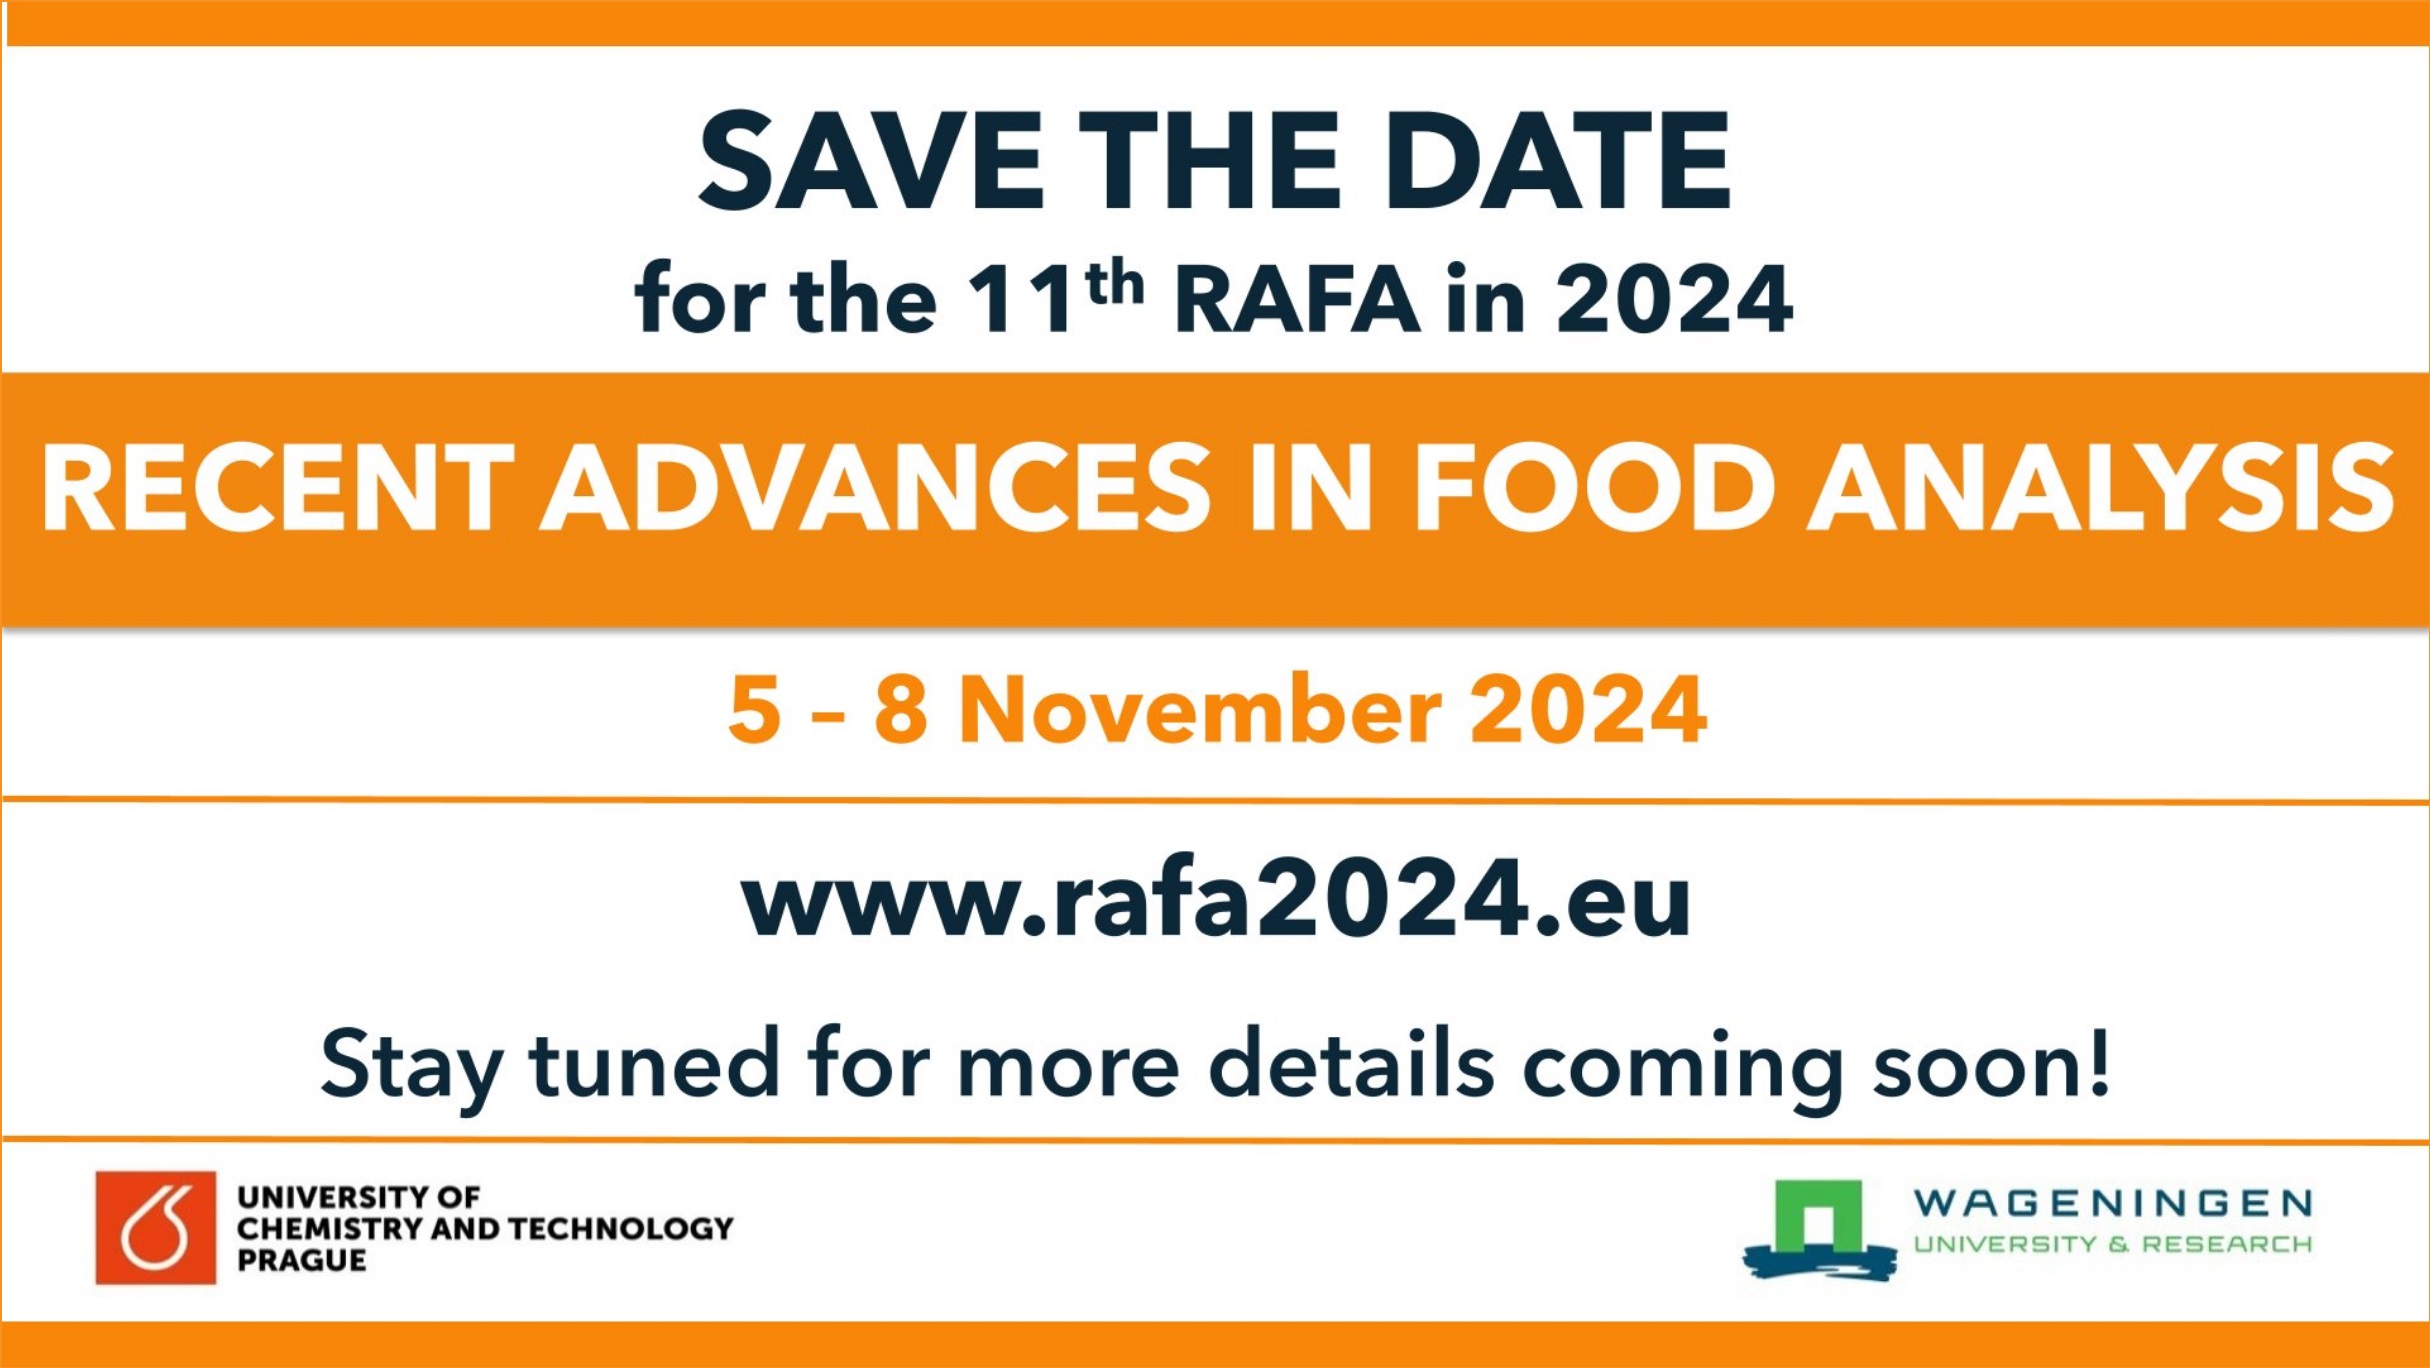 RAFA 2024: 11th International Symposium on
RECENT ADVANCES IN FOOD ANALYSIS